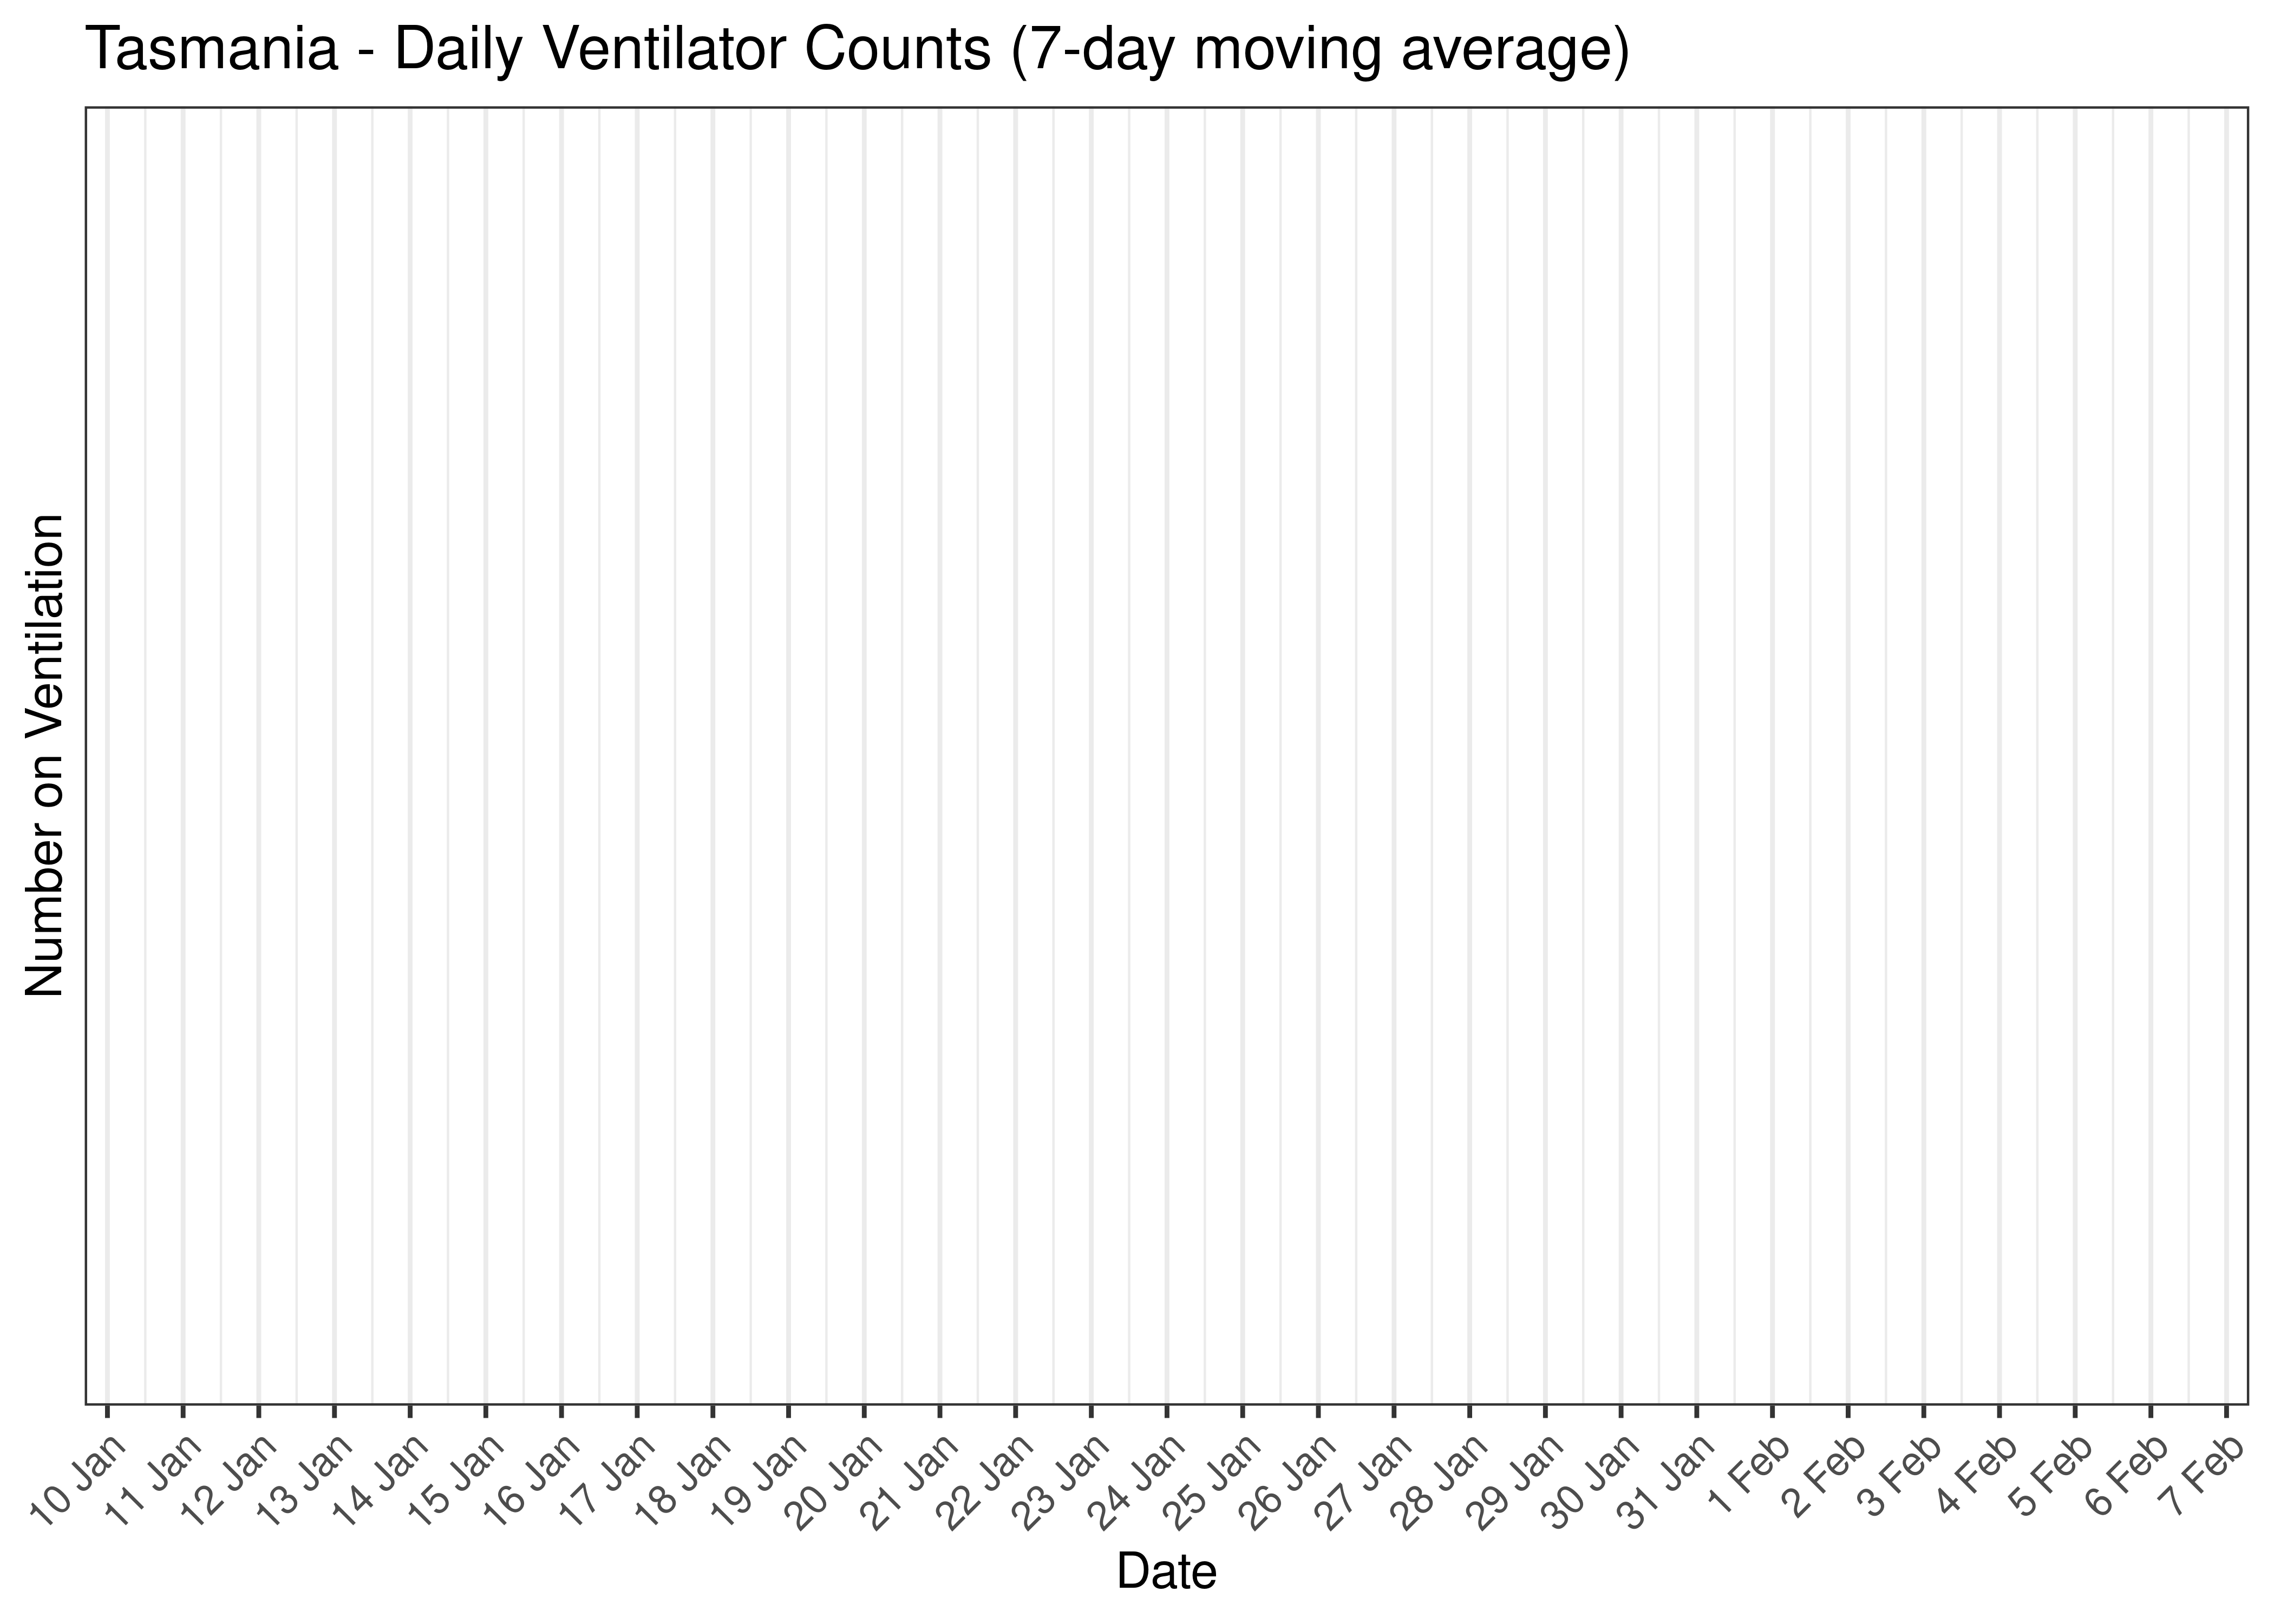 Tasmania - Percentage Testing Positive for Last 30 Days (7-day moving average)